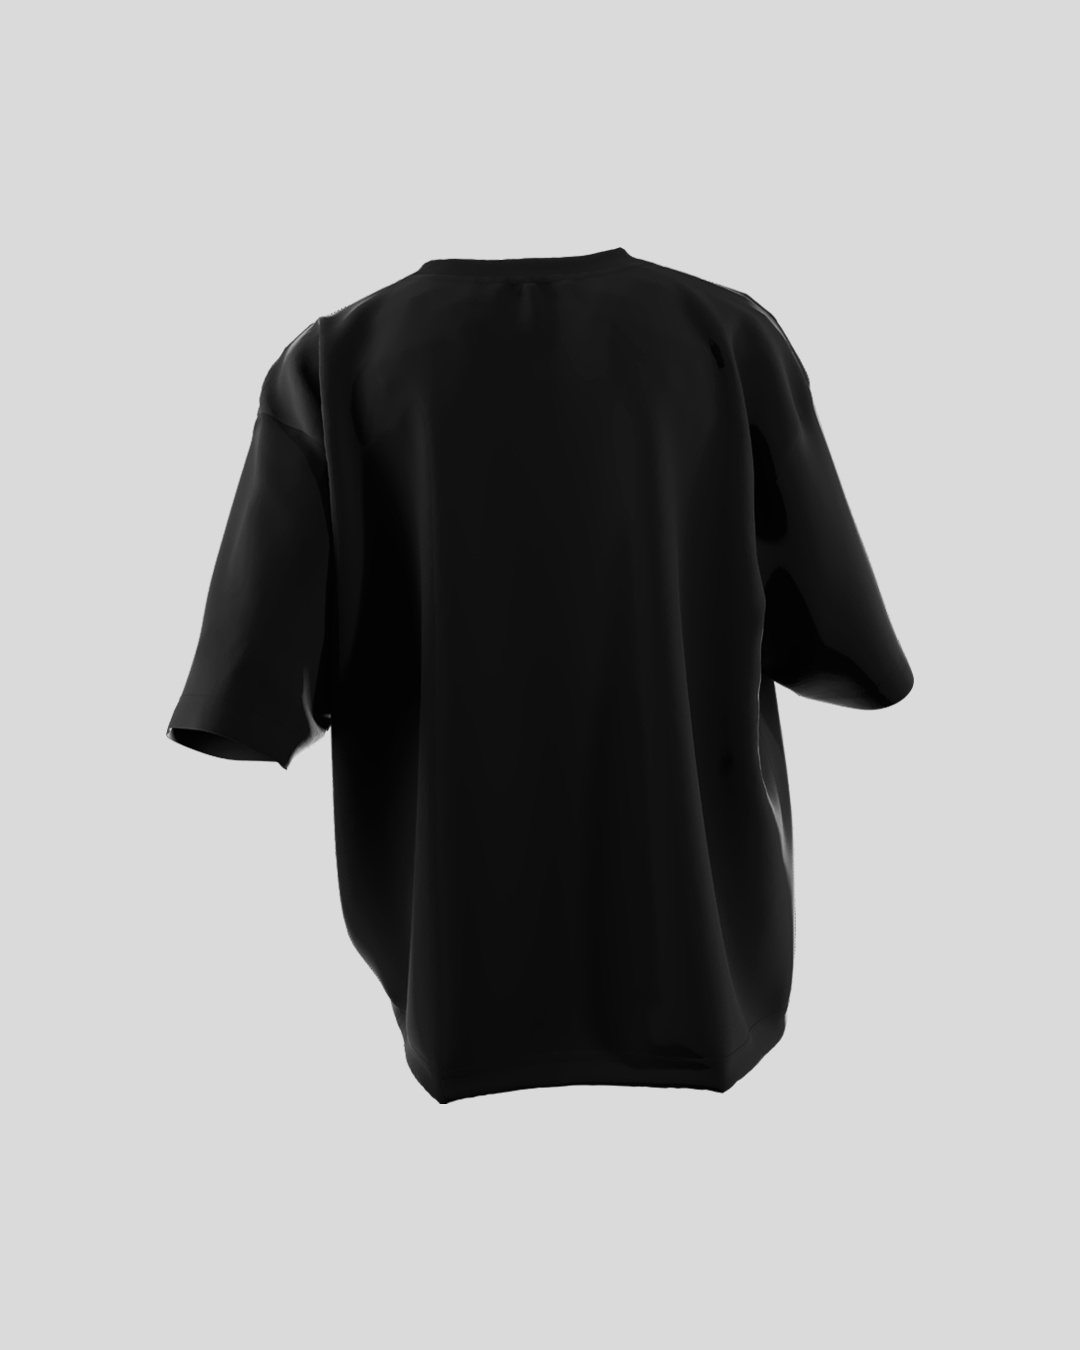 Dark PatrickPower Tee oversized t shirt for mens and women both